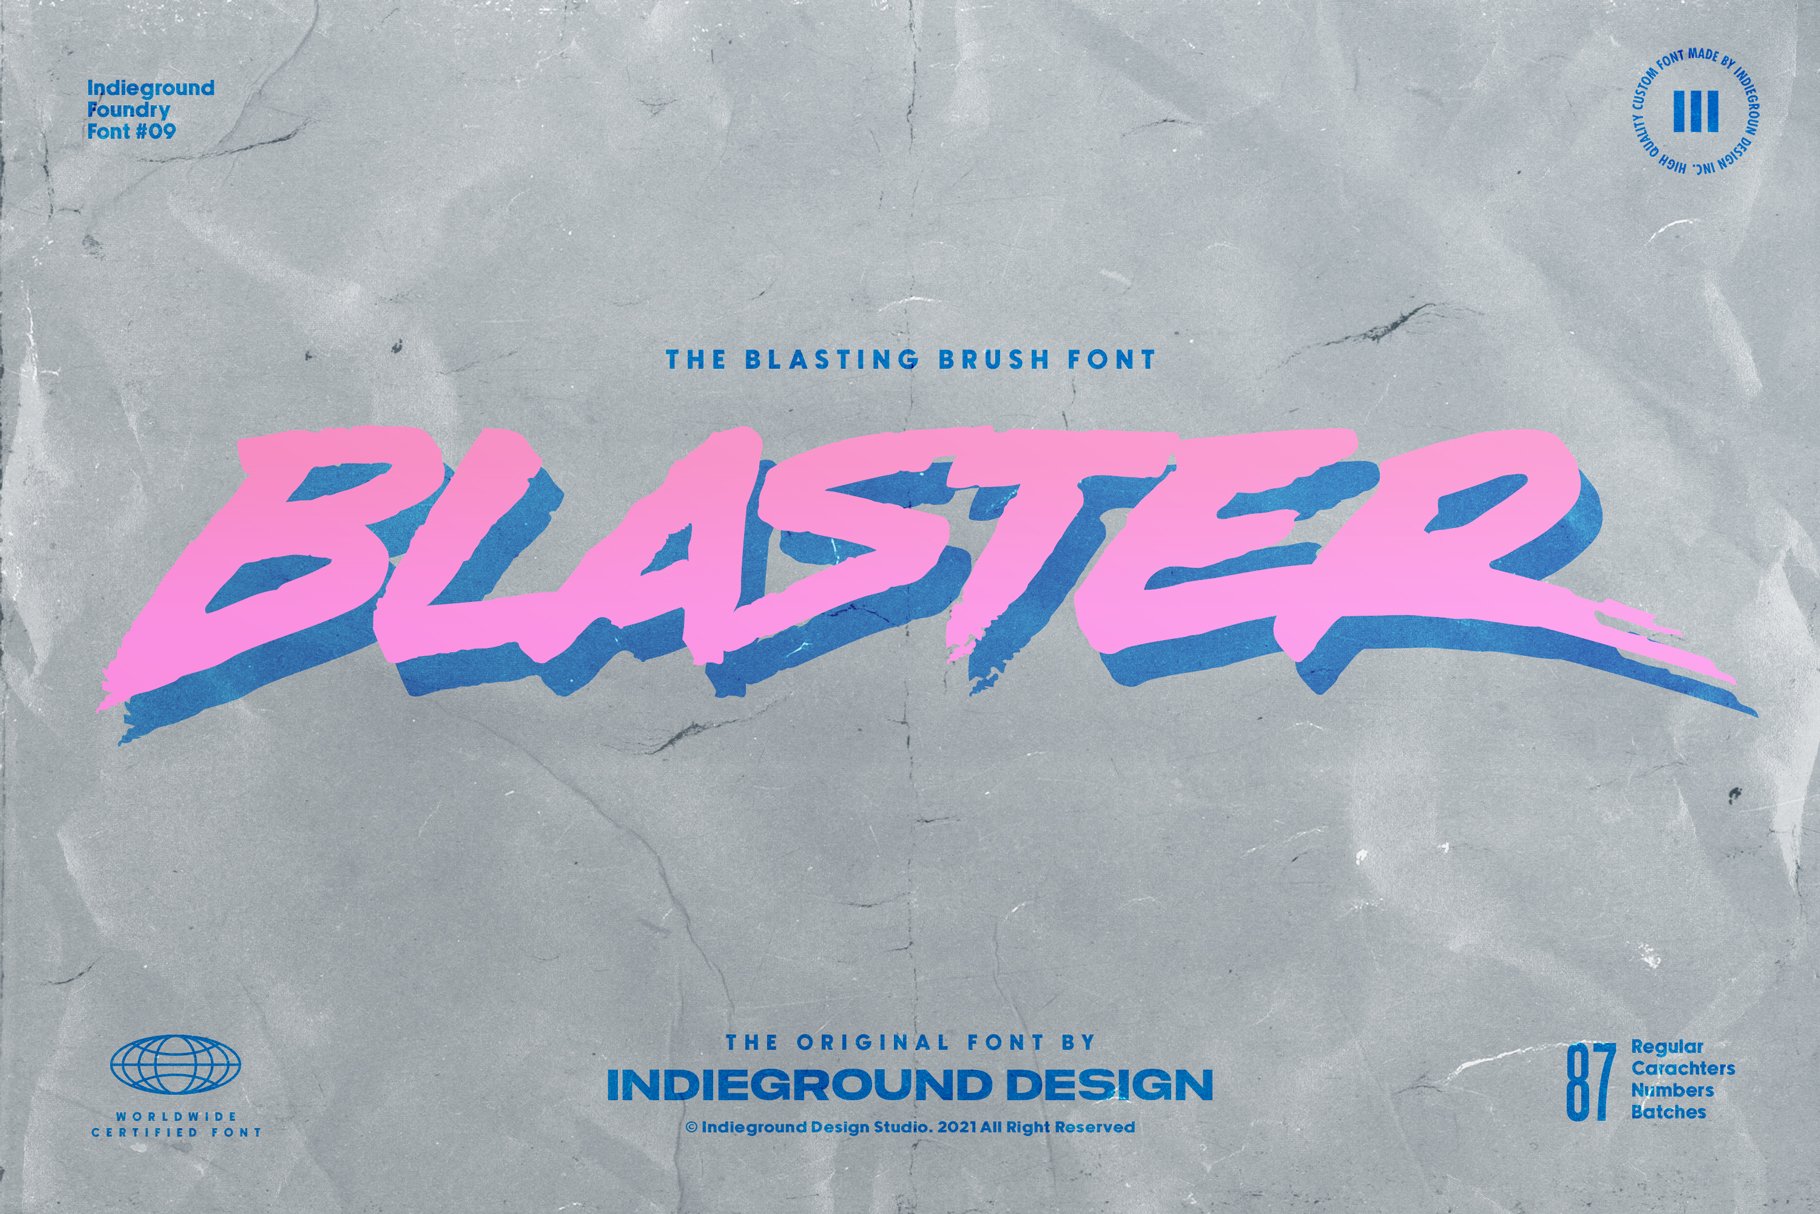 Blaster Font cover image.